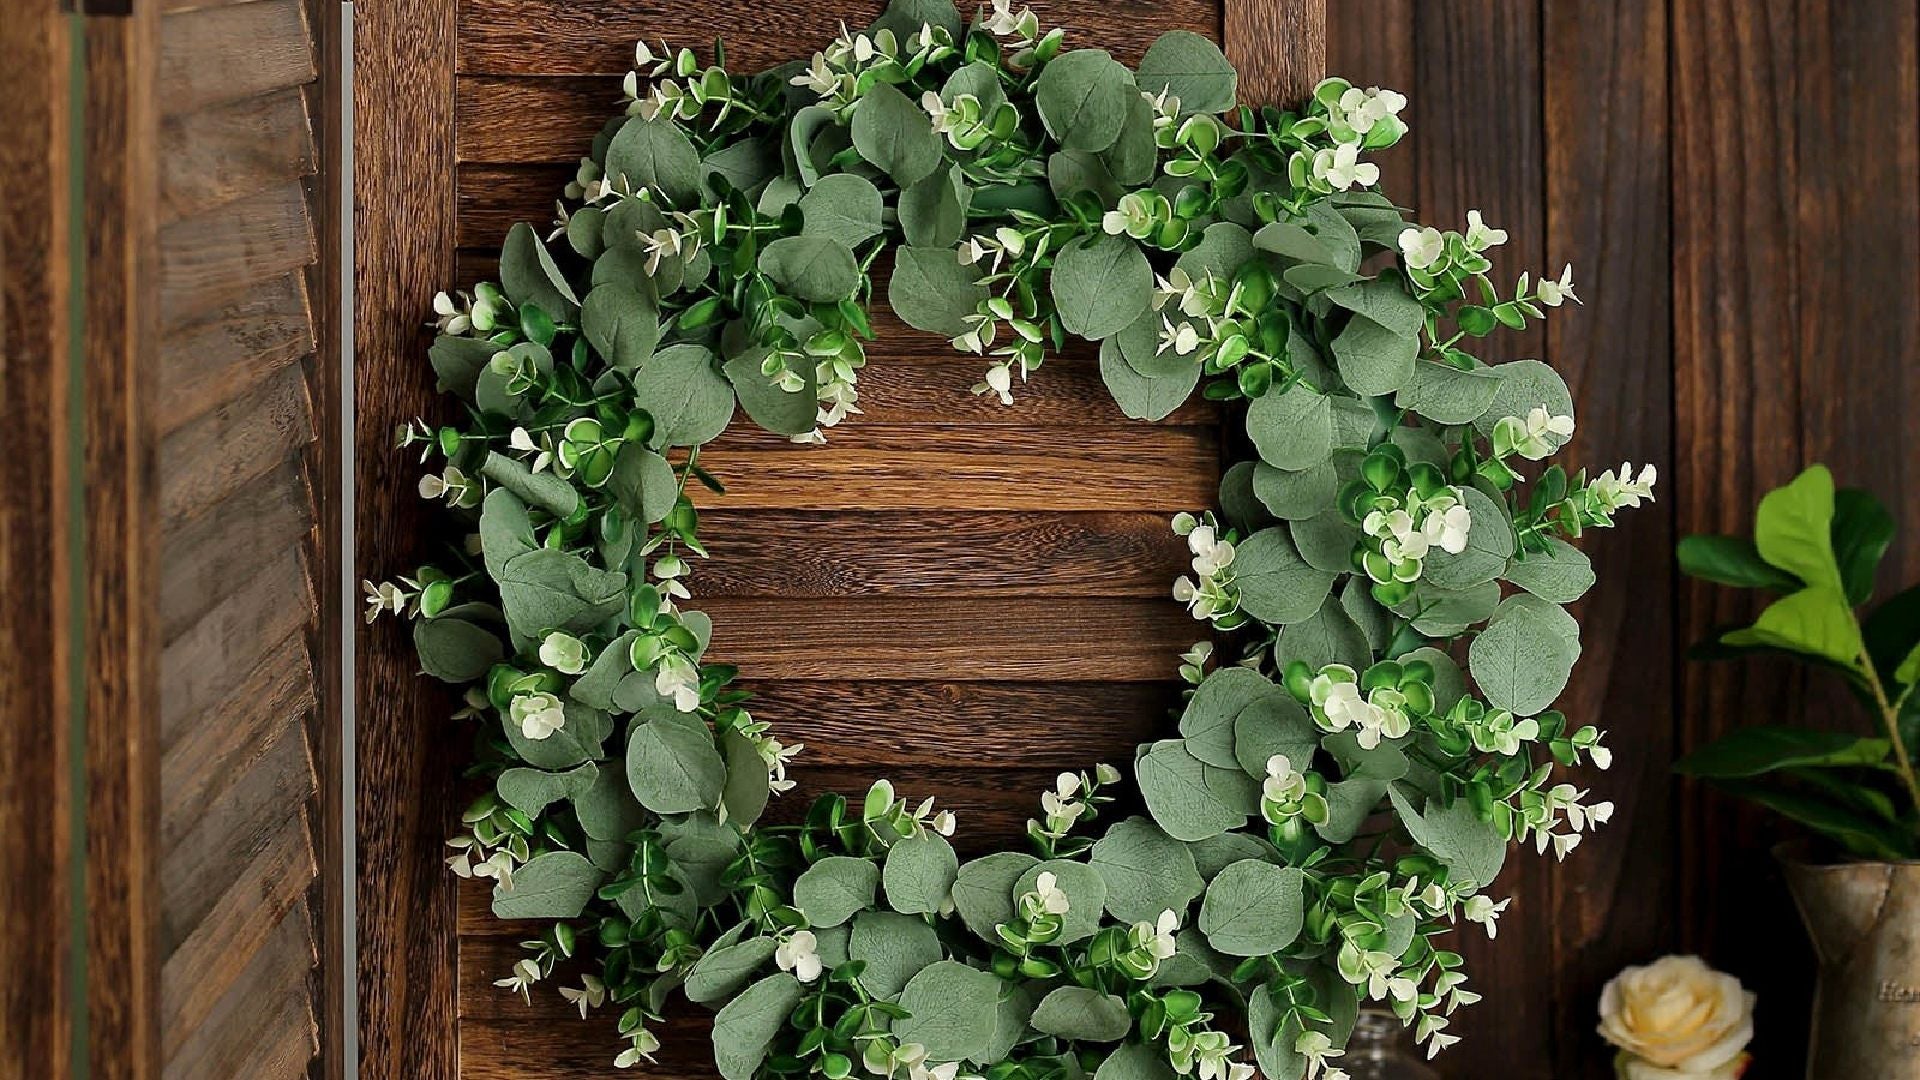 Scandinavian Style: Minimalist Wreaths with a Natural Twist